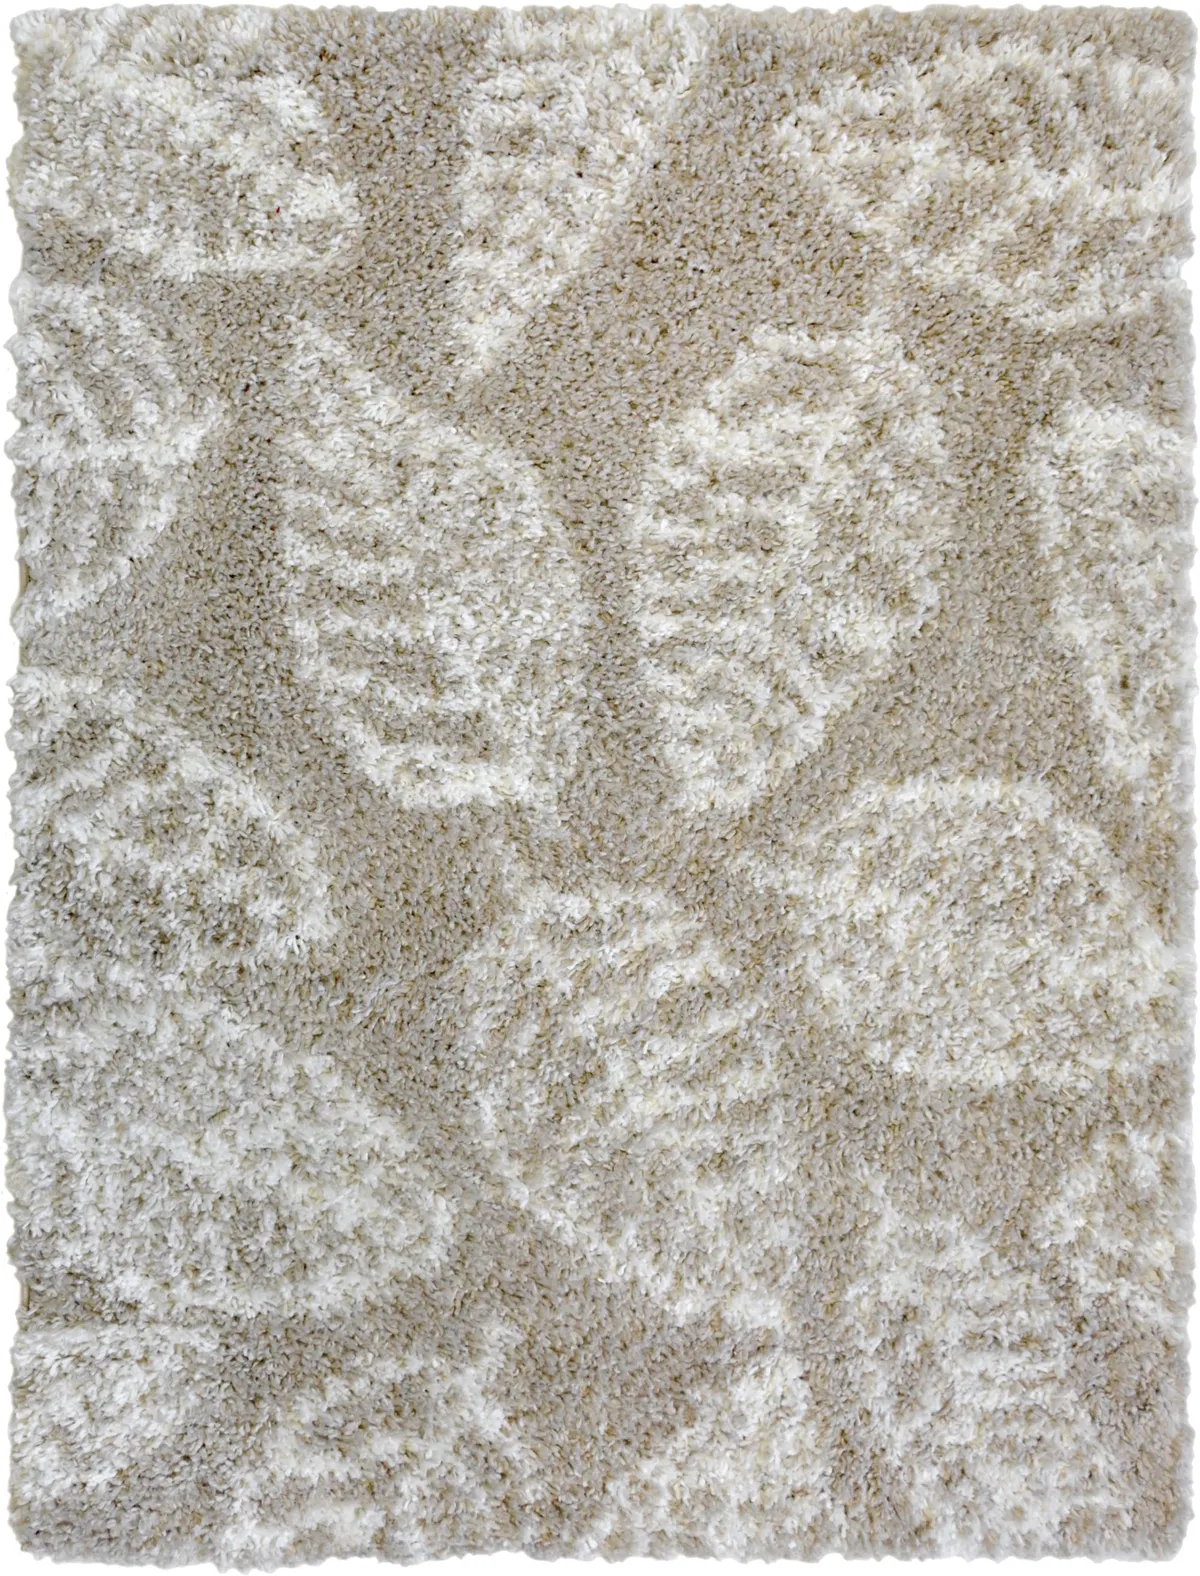 New noble shaggy autumn leaves rug, £49.99, Carpetright